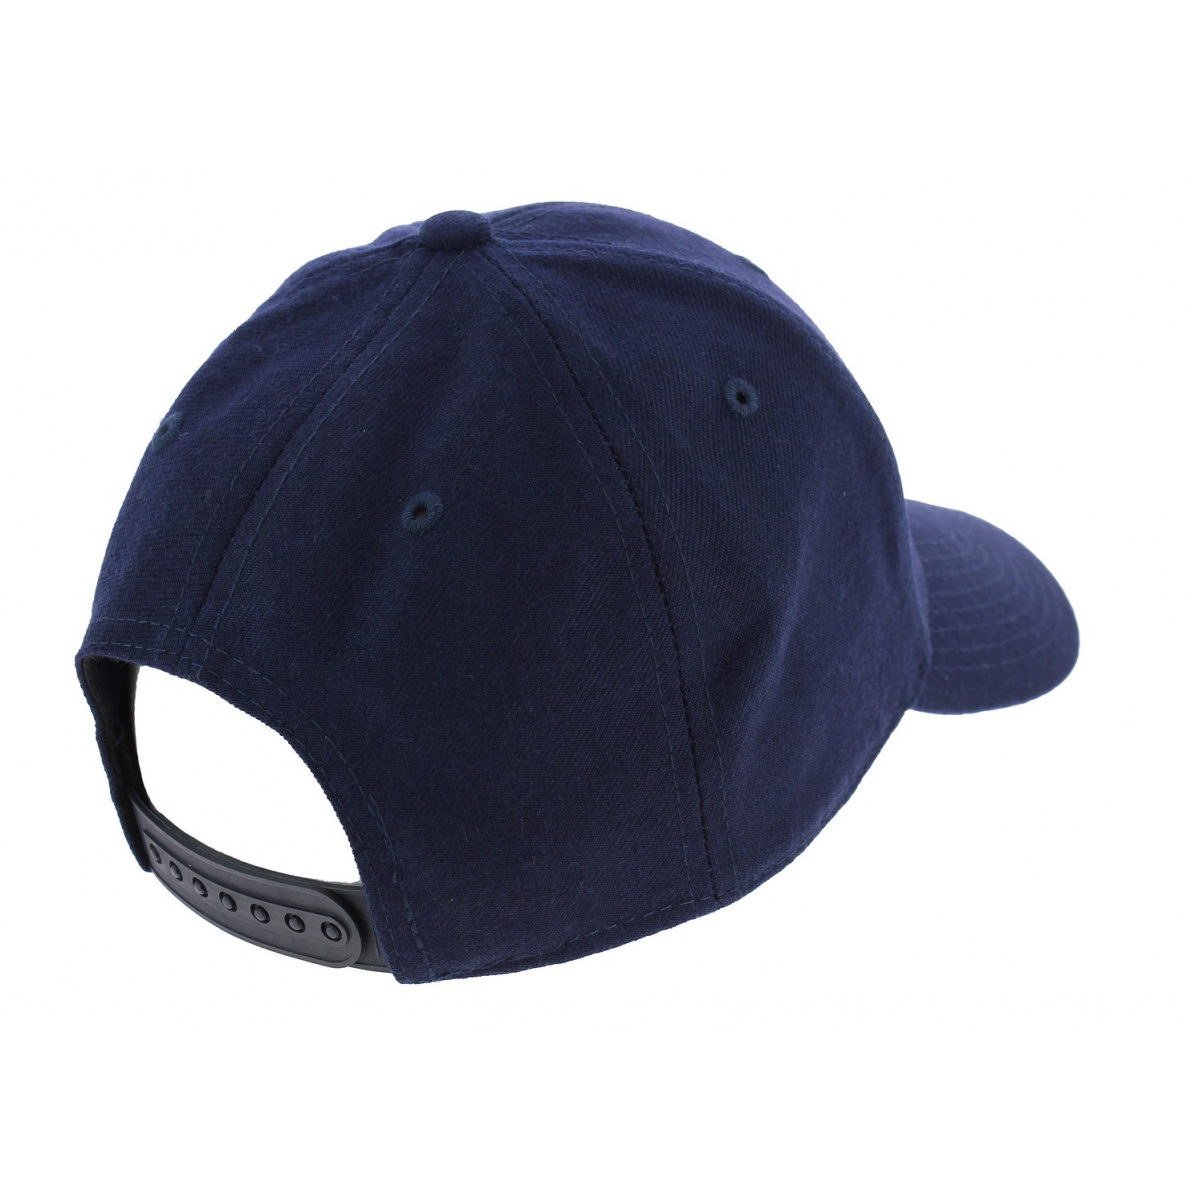 Unisex Classic Novelty Tennis Cap Baseball Hat HMLA-469/_Logo Outdoor Cap Adjustable